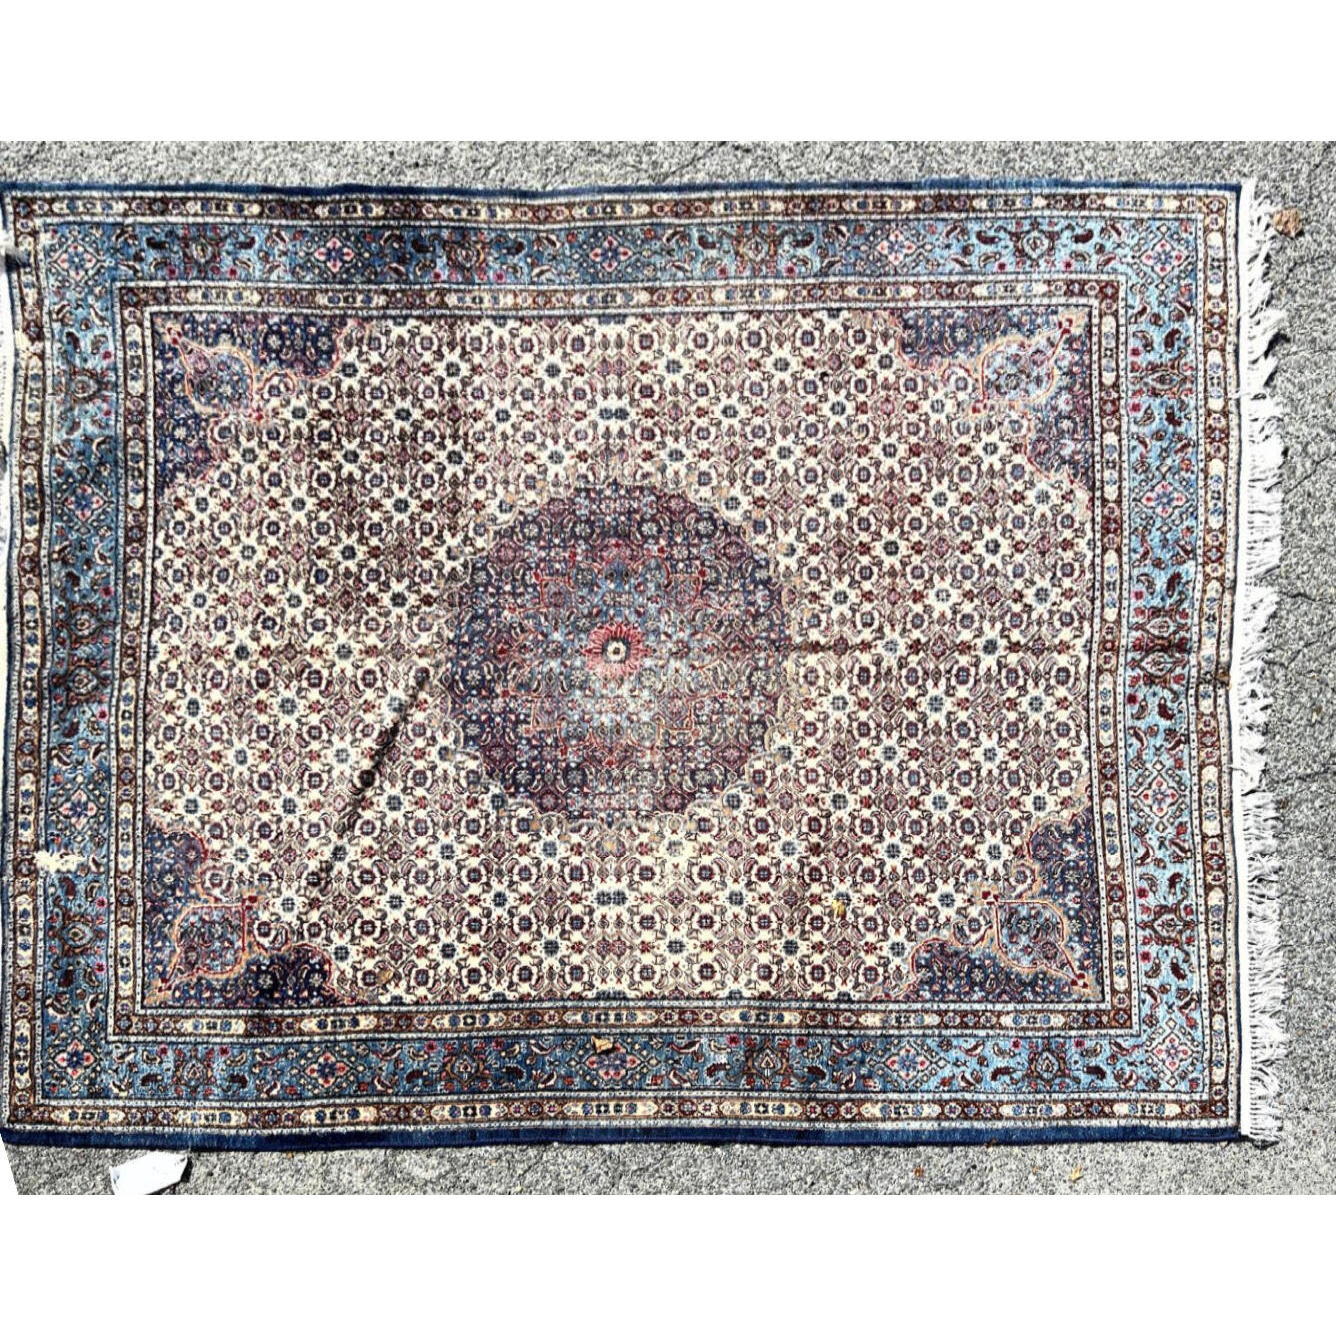 8 4 x 6 9 Handmade Oriental Carpet 2fed87